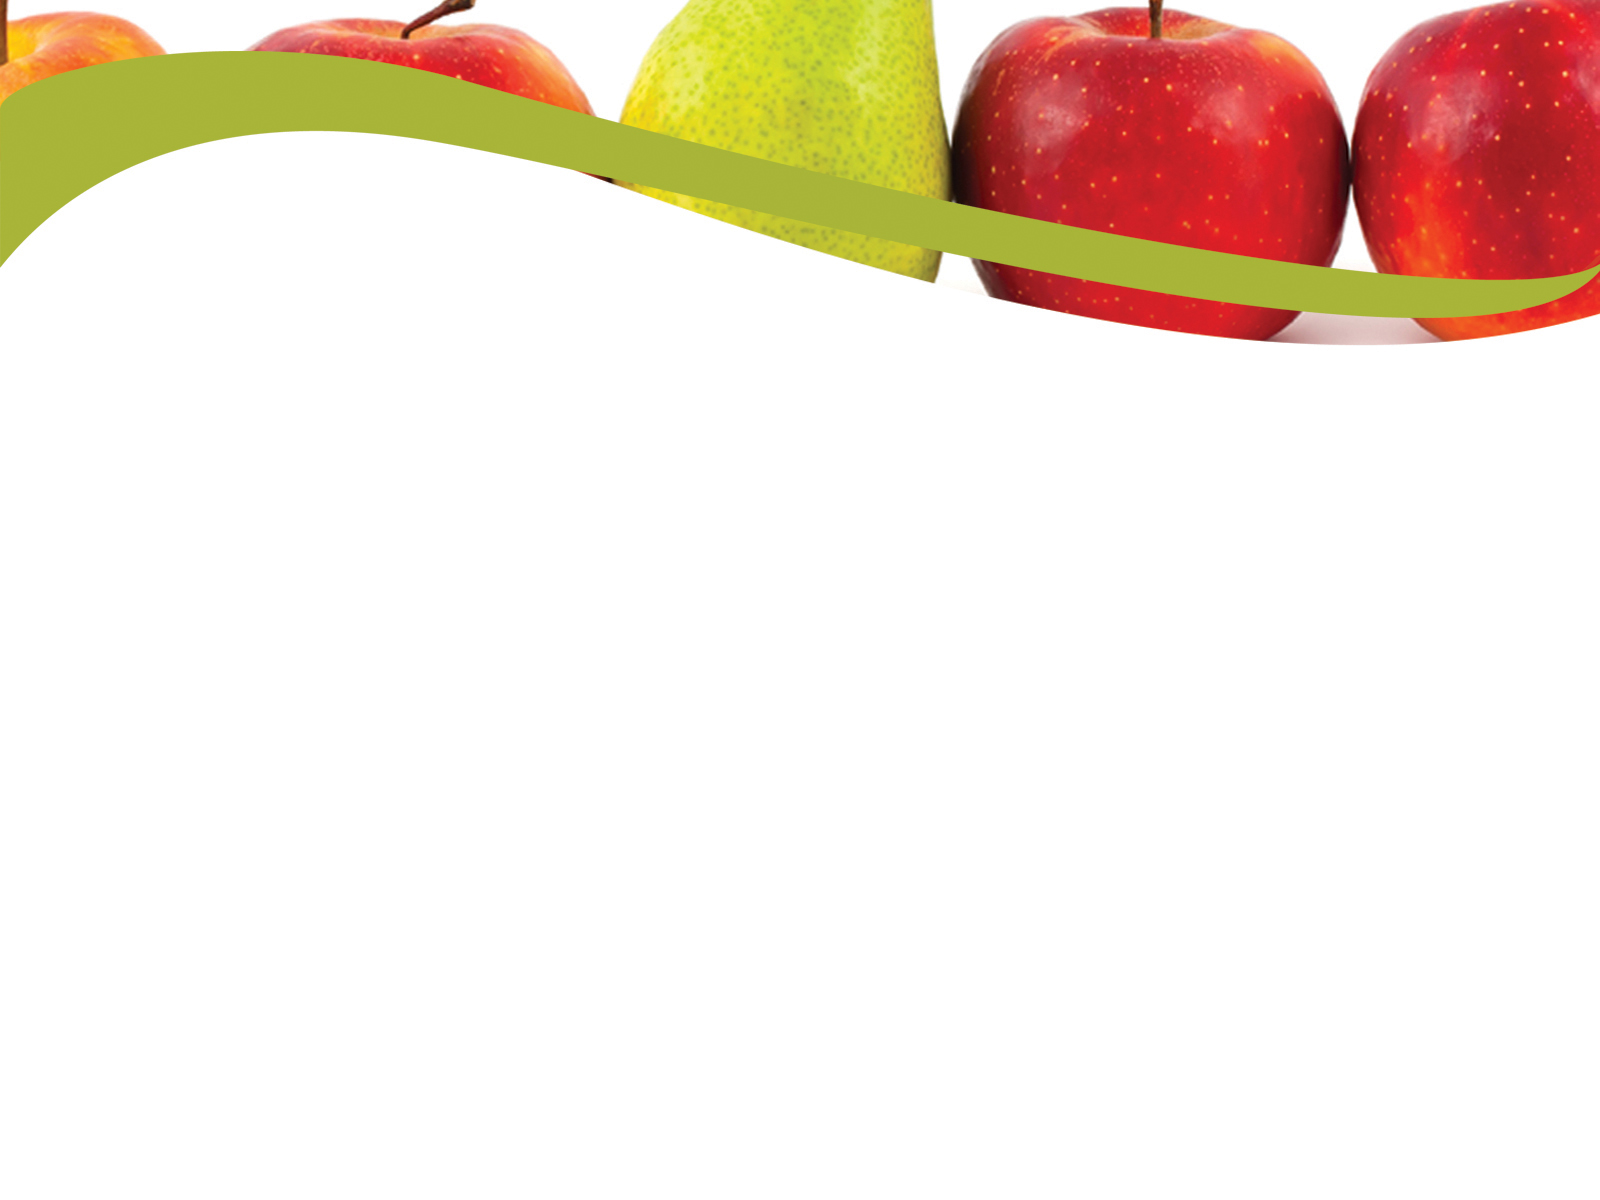 Diet-fruit-calories-Slide-Master.jpg